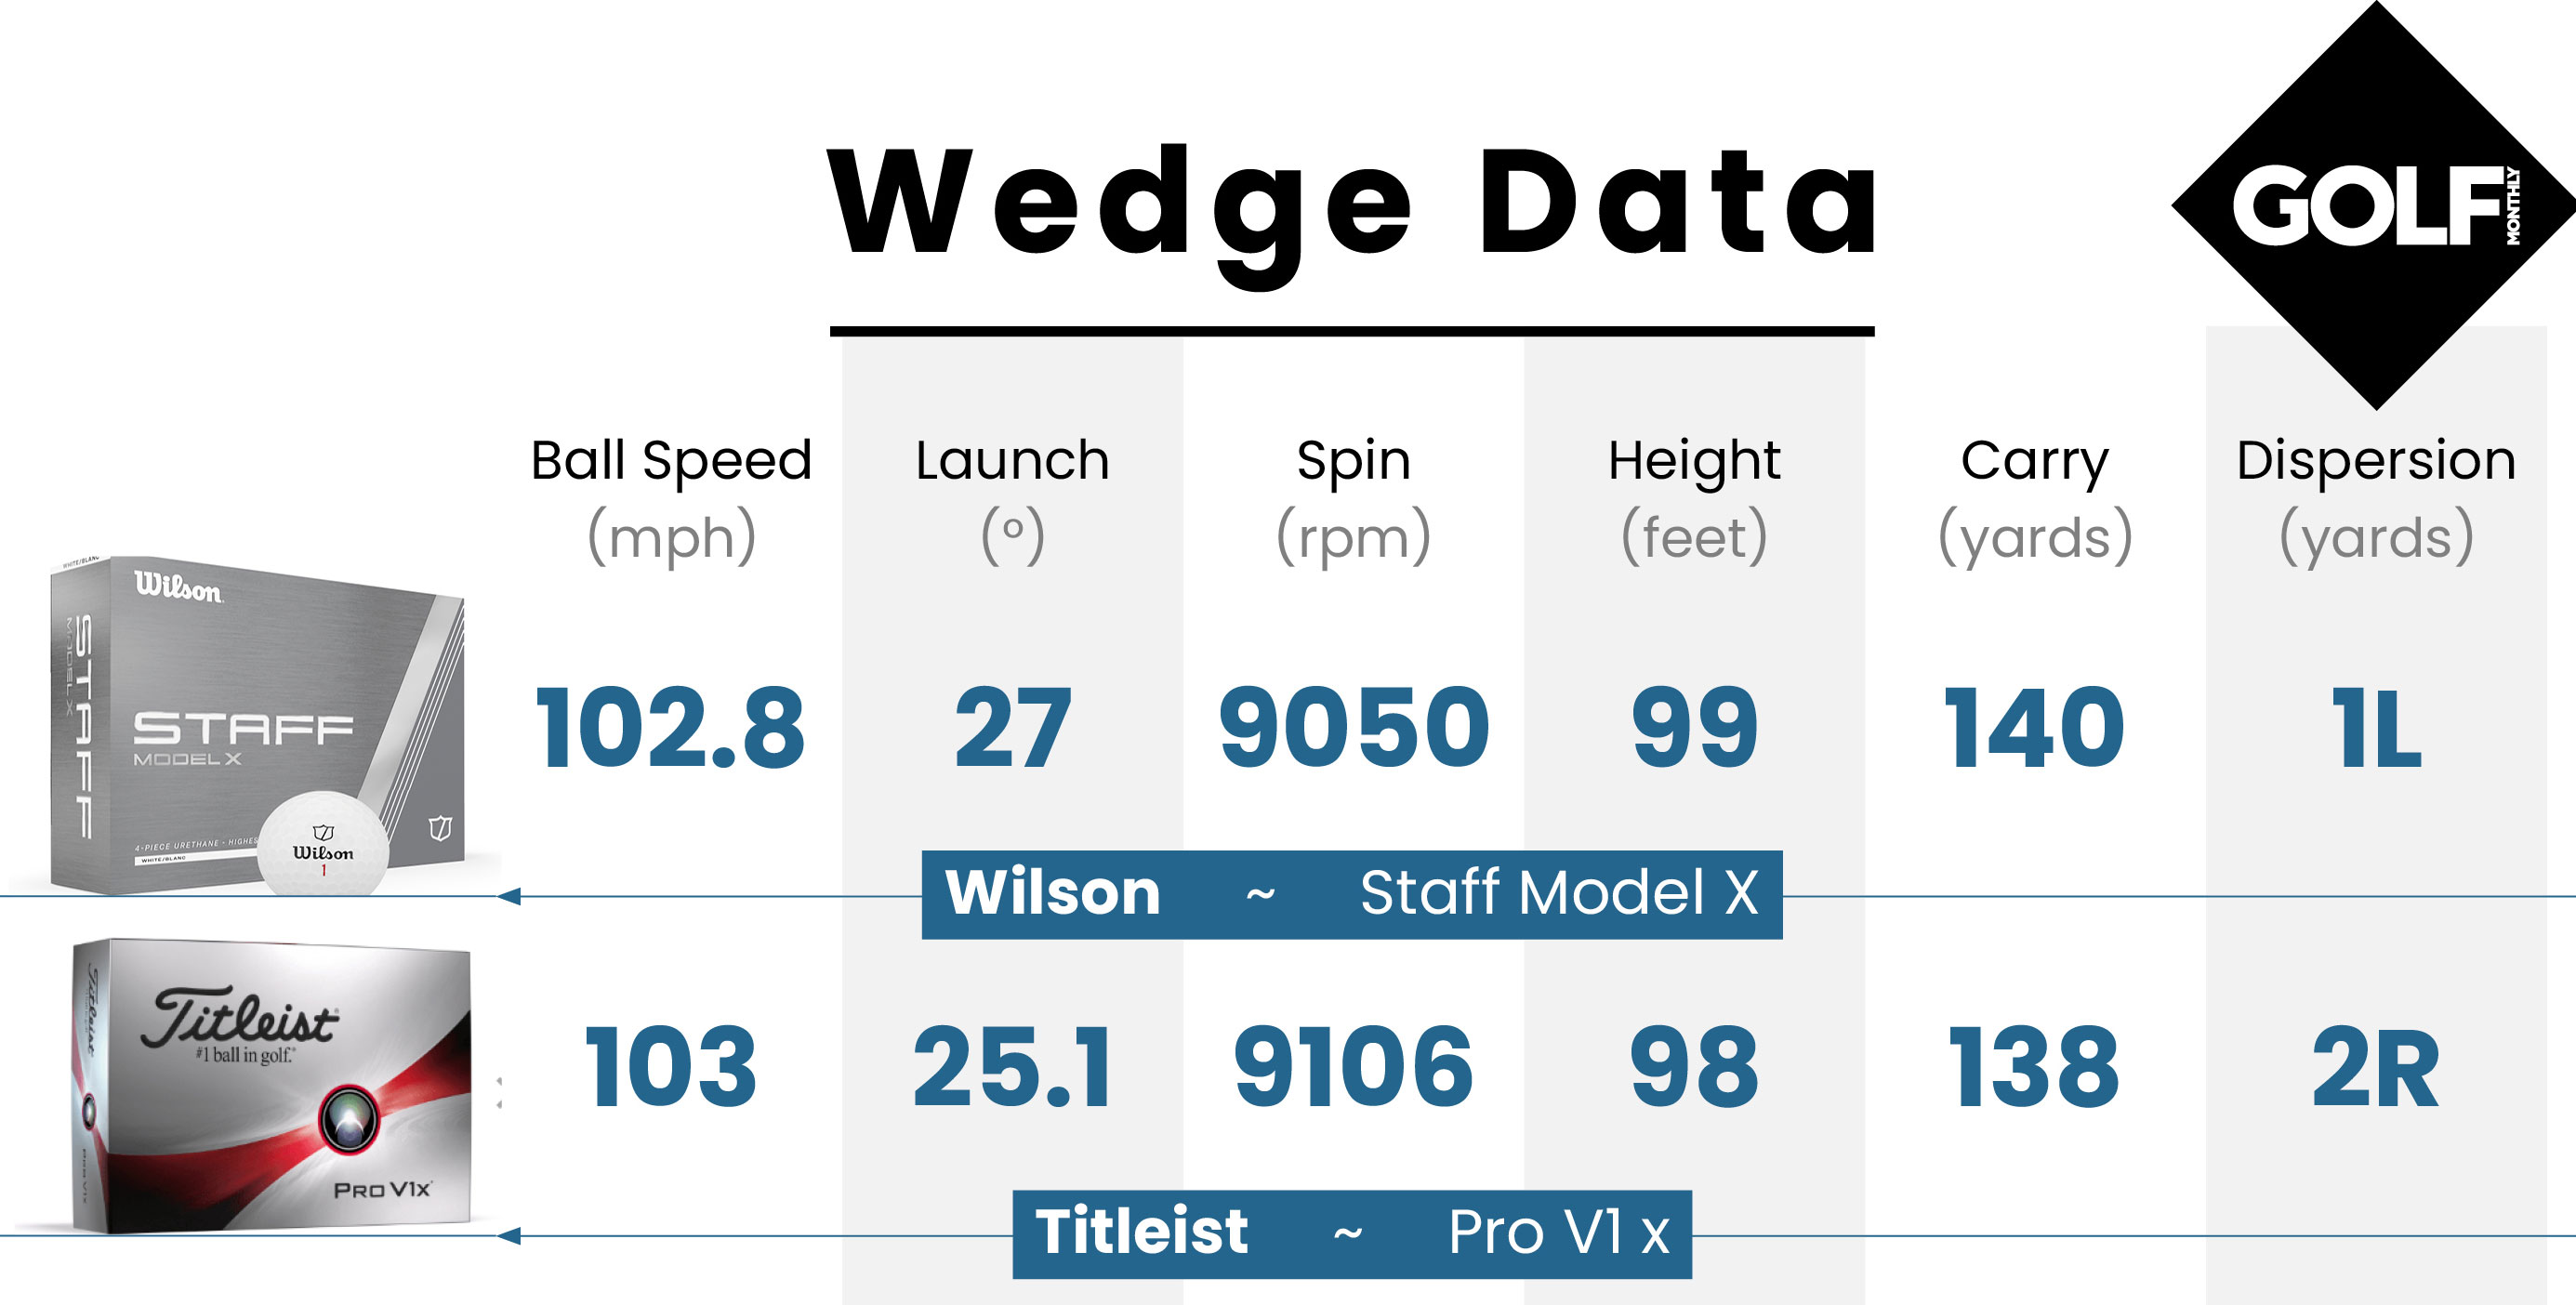 Wedge data for the Wilson Staff Model X Golf Ball